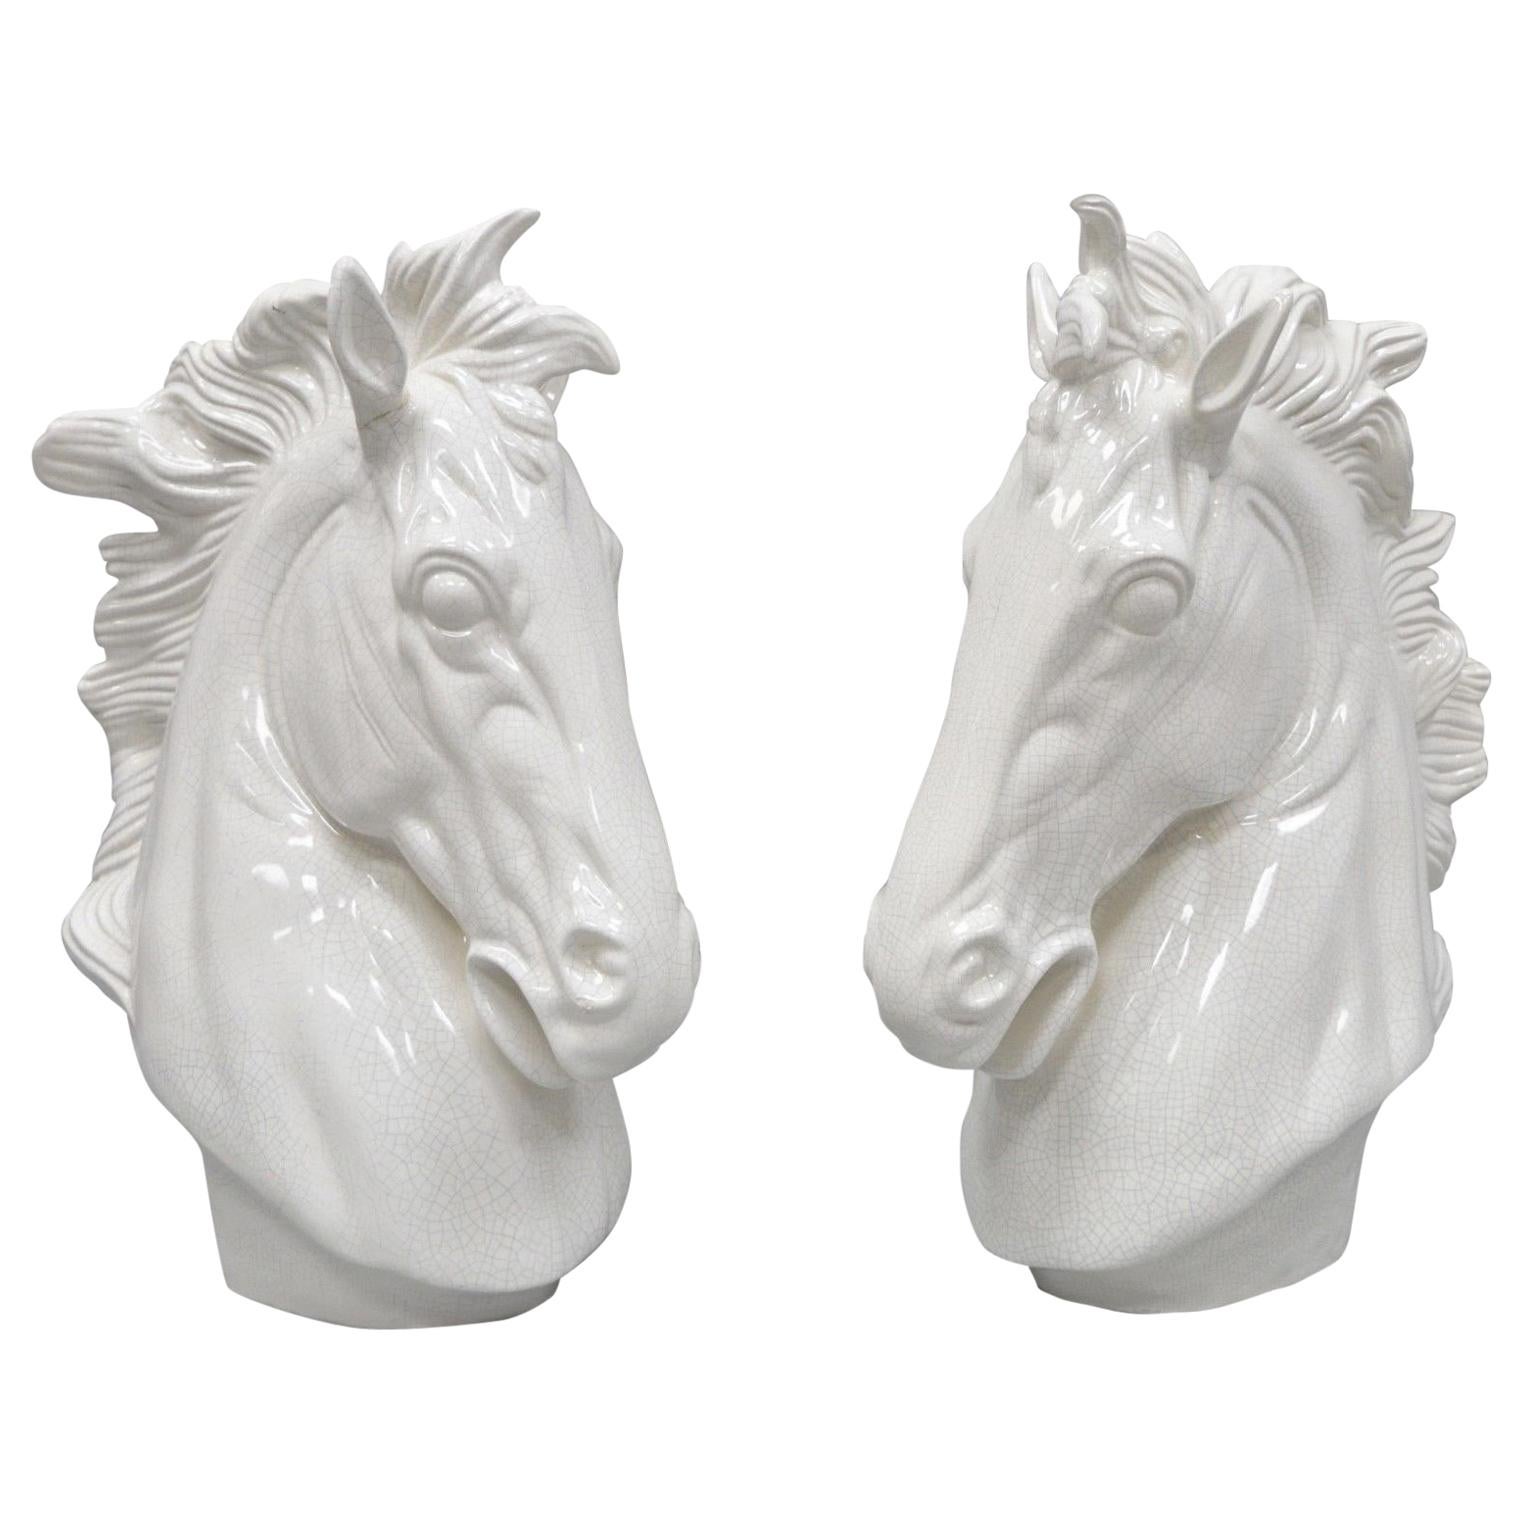 Large 25" Pair of Blanc De Chine White Porcelain Horse Head Bust Statues Figures